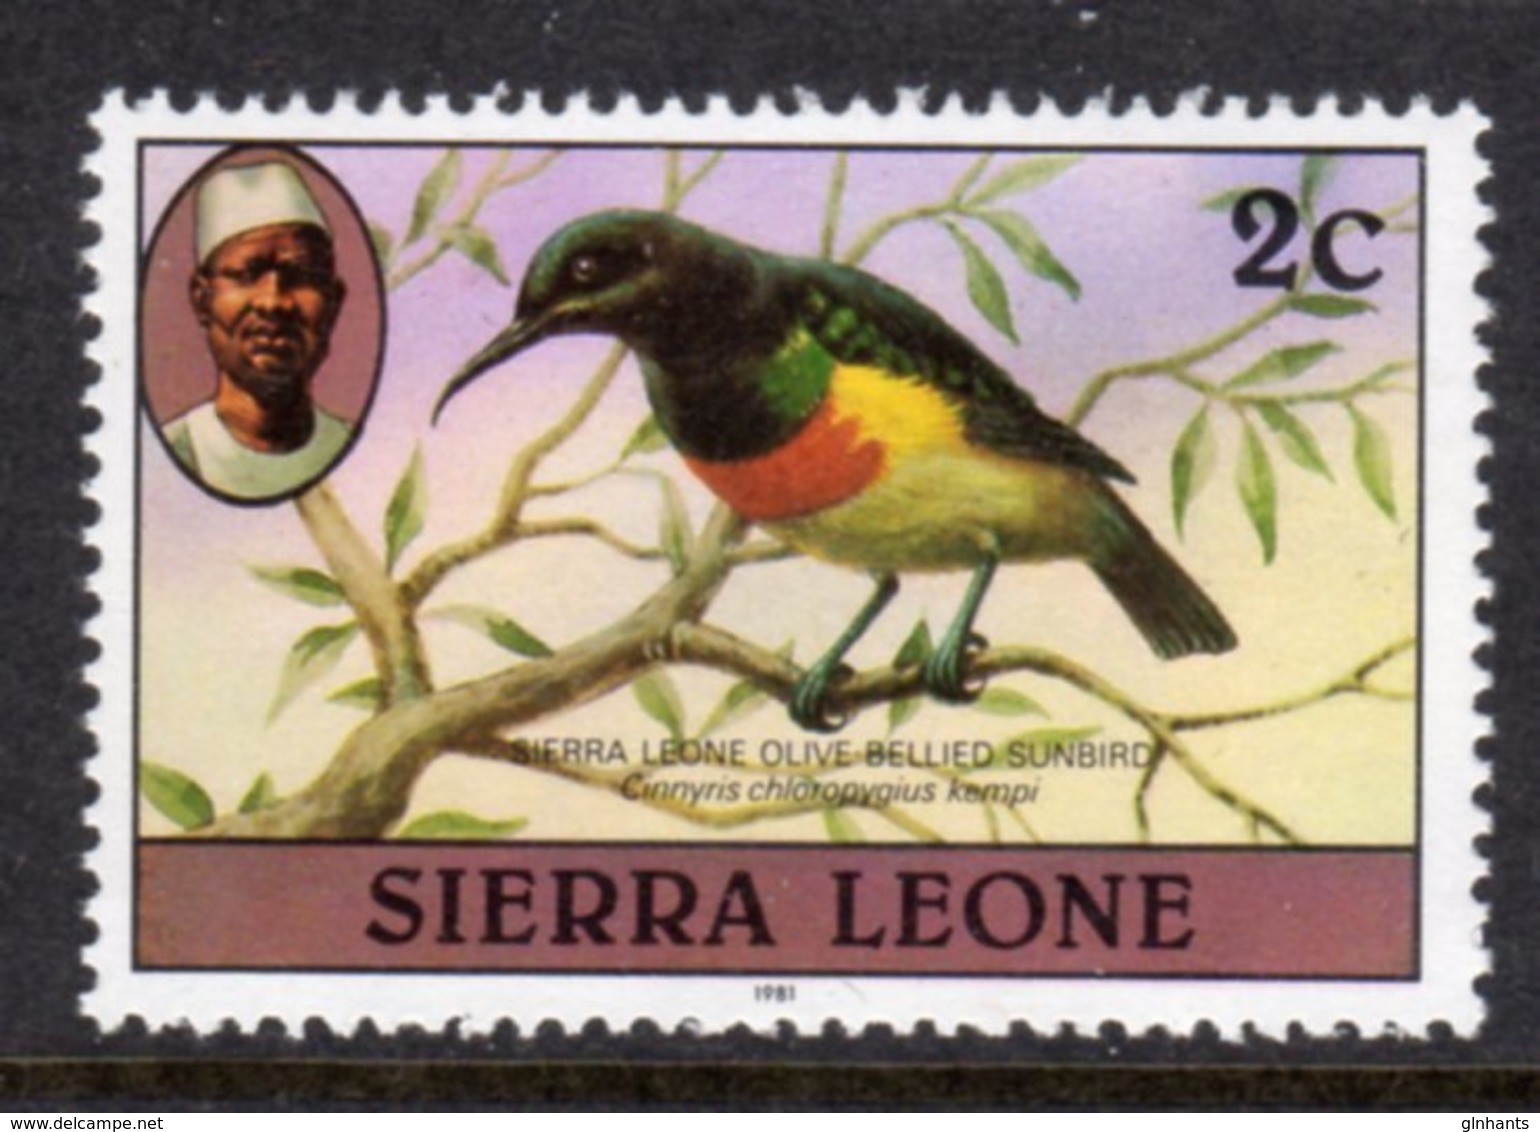 SIERRA LEONE - 1982 2c OLIVE-BELLIED SUNBIRD BIRD STAMP WITH IMPRINT DATE FINE MNH ** SG 623B - Sierra Leone (1961-...)